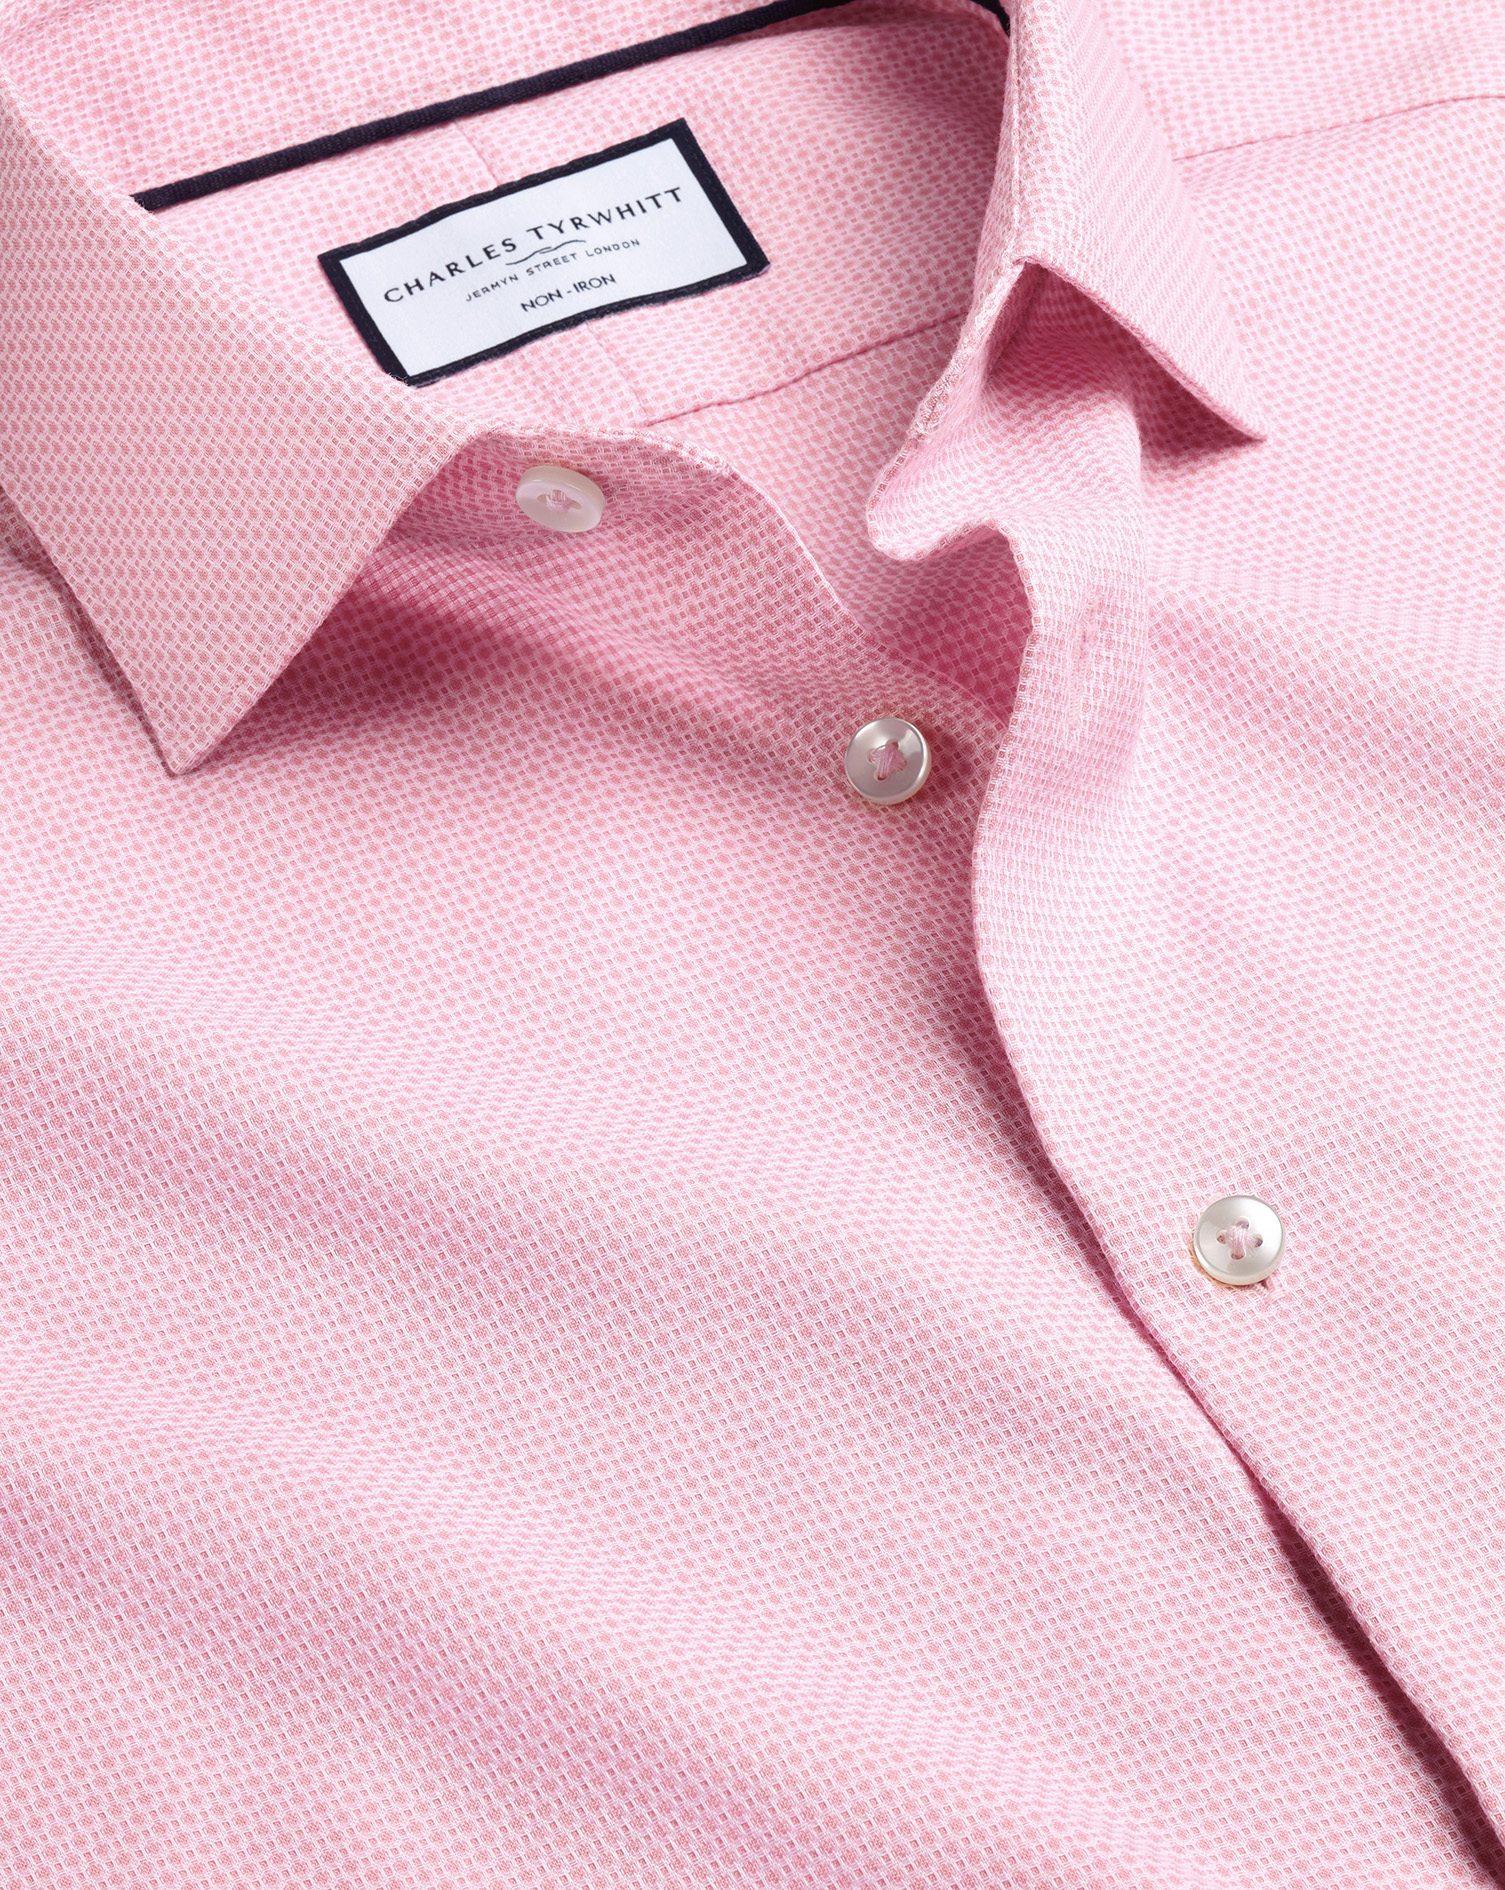 Men's Charles Tyrwhitt Non-Iron Stretch Texture Oval Dress Shirt - Pink Single Cuff Size 15.5/34 Cot